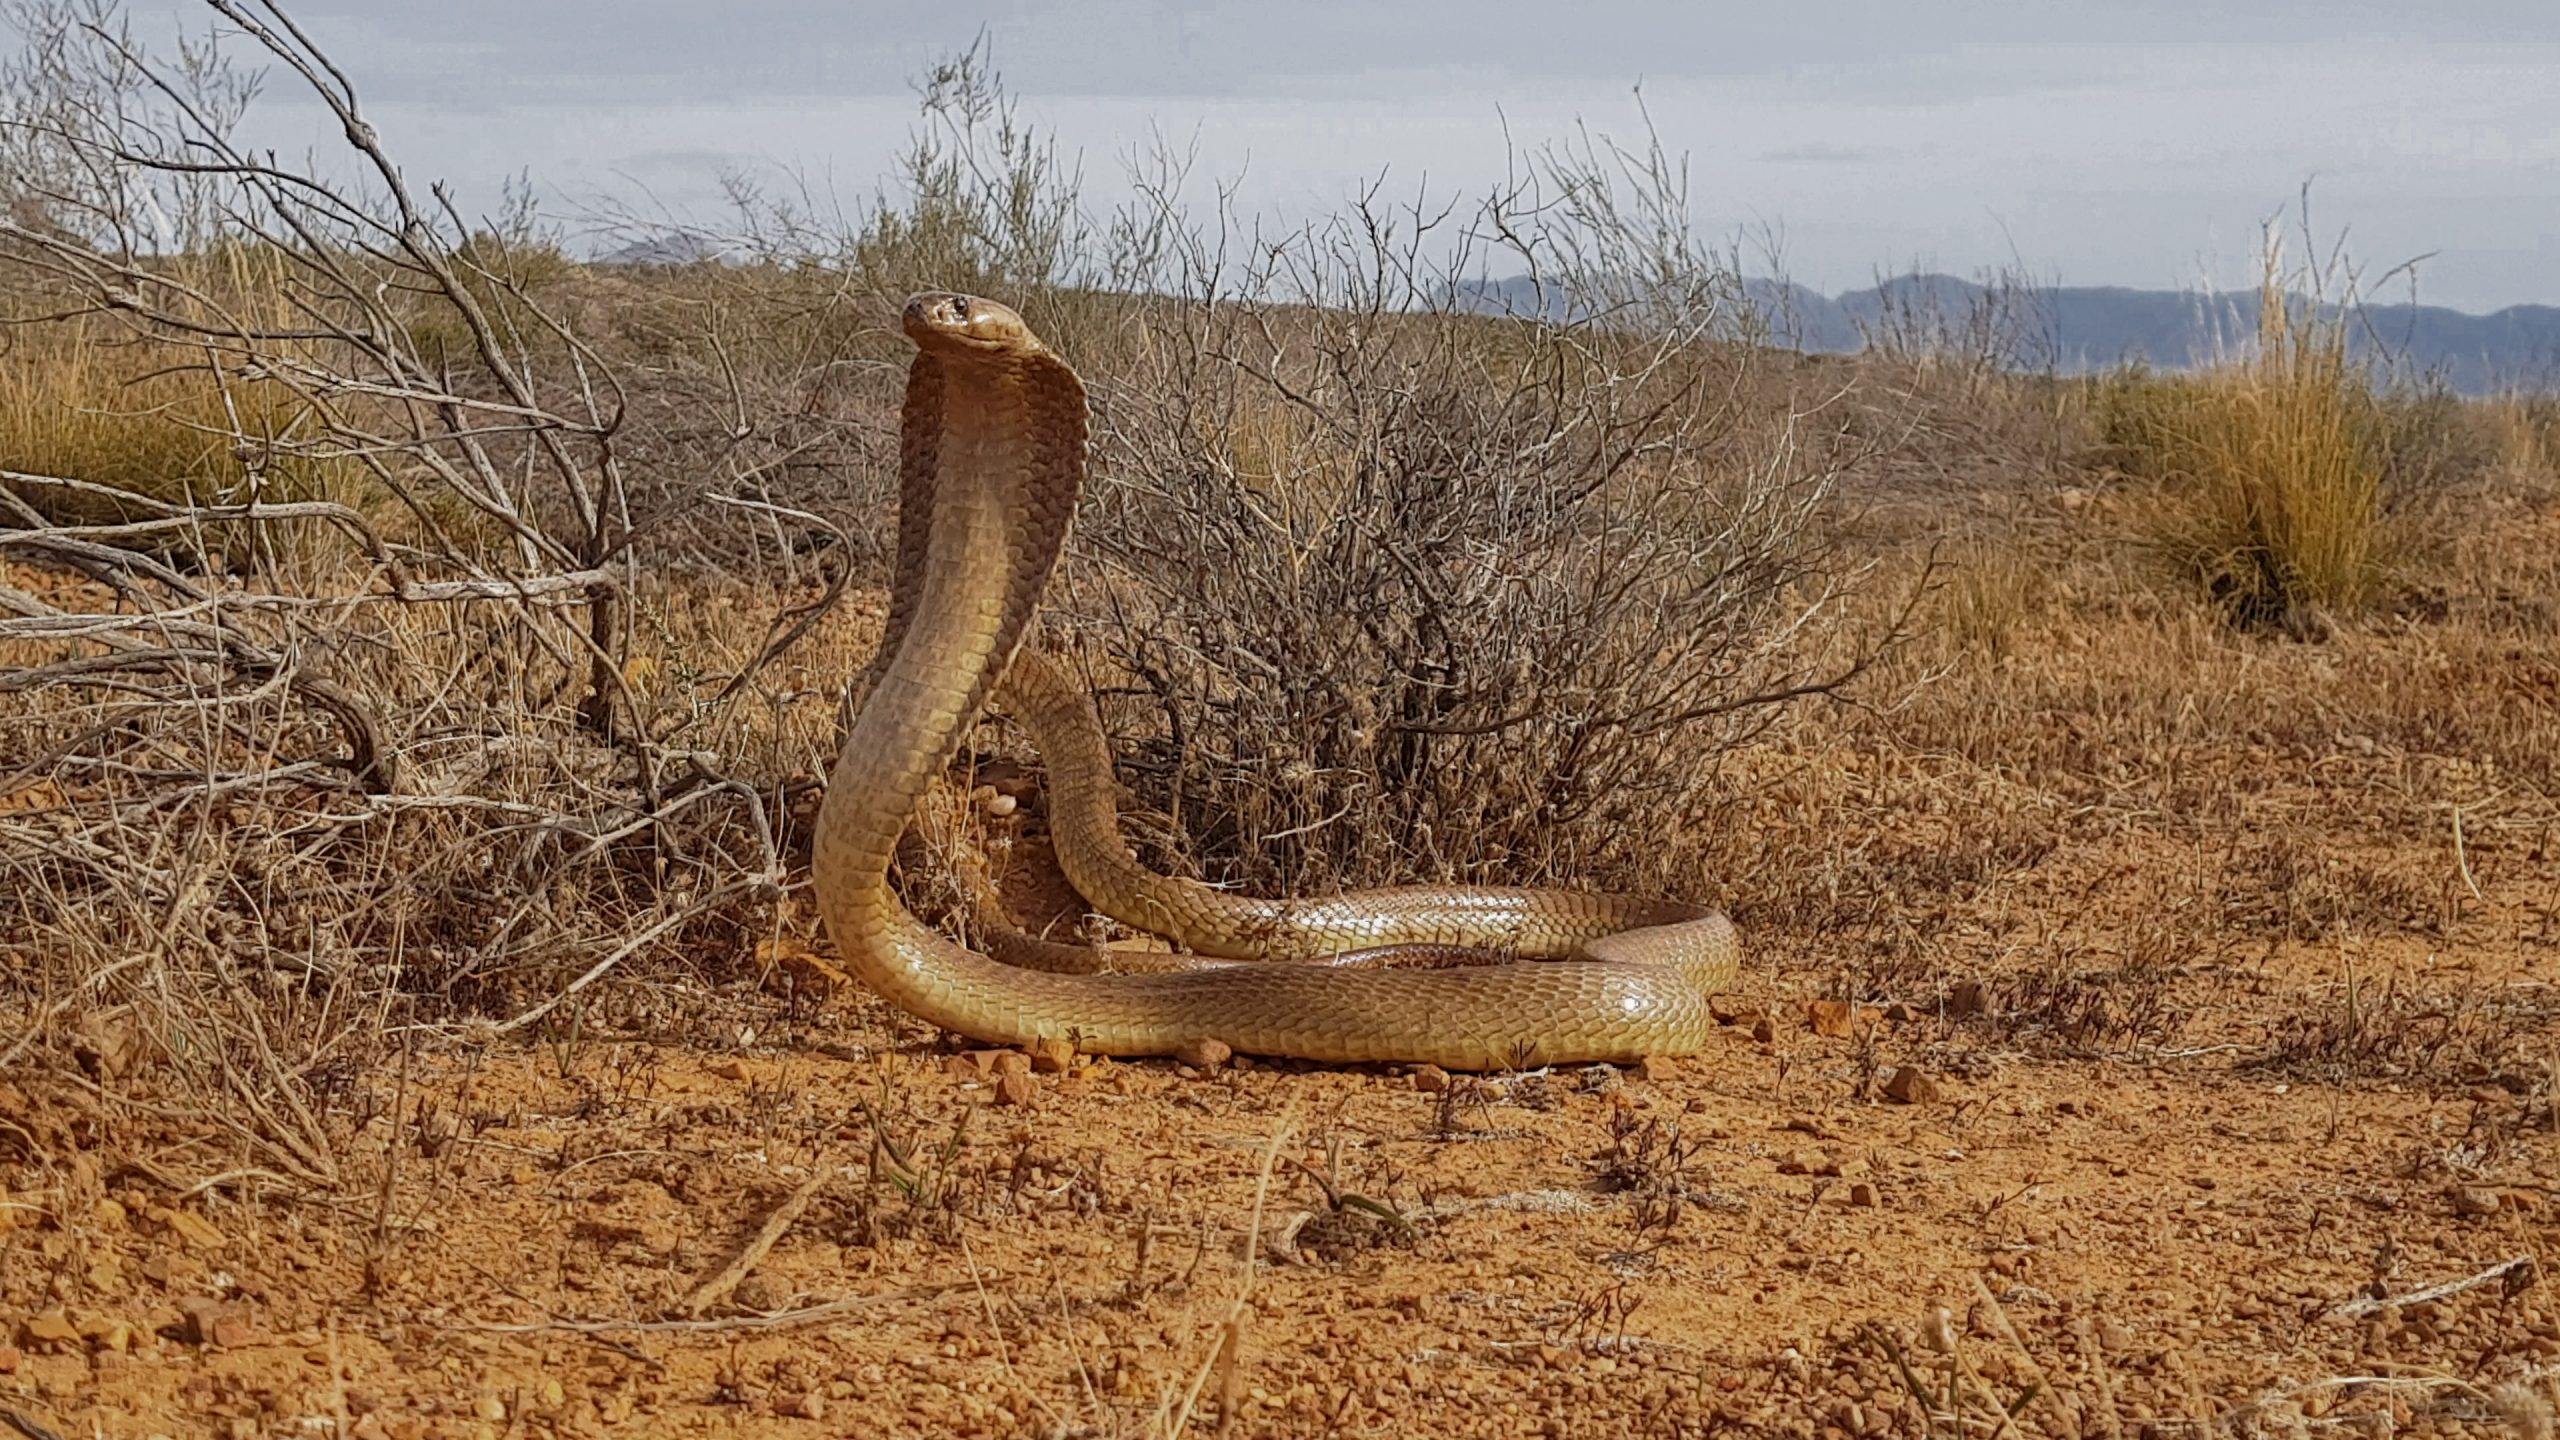 साप – Snakes In Hindi